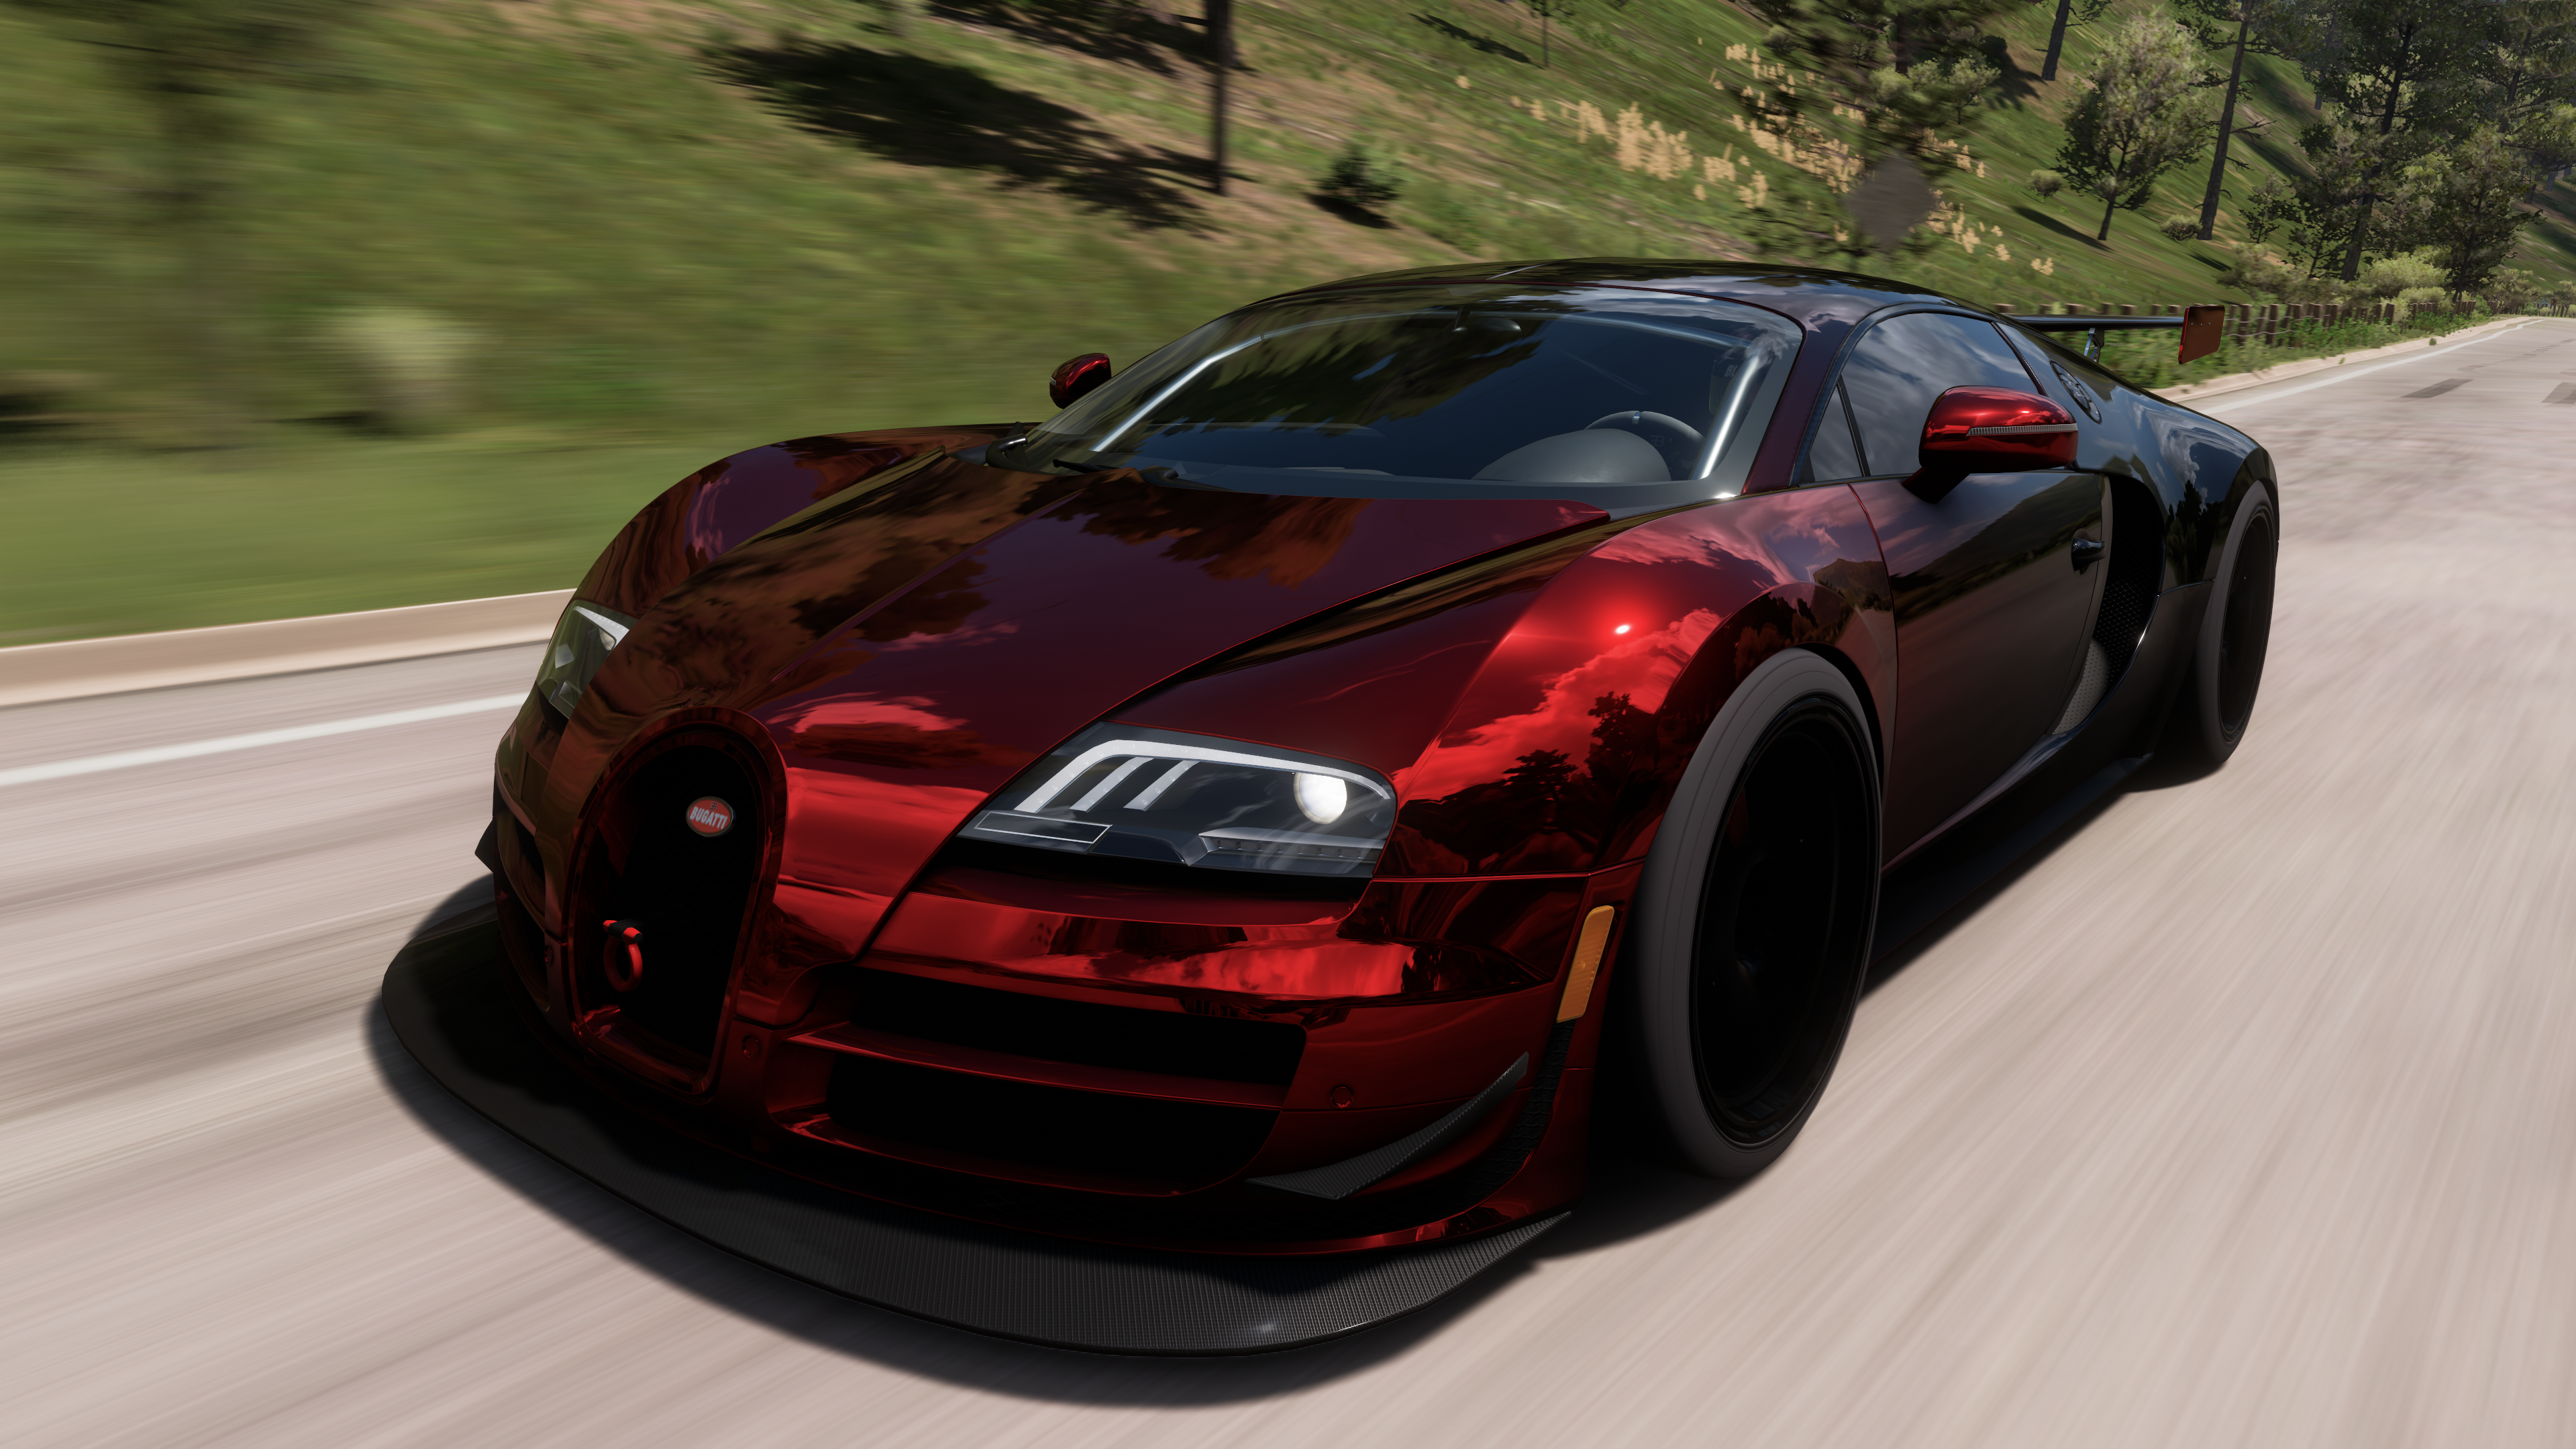 Bugatti Veyron Forza Horizon 5 Car Video Games CGi Front Angle View Headlights Road Red Cars 3839x2159